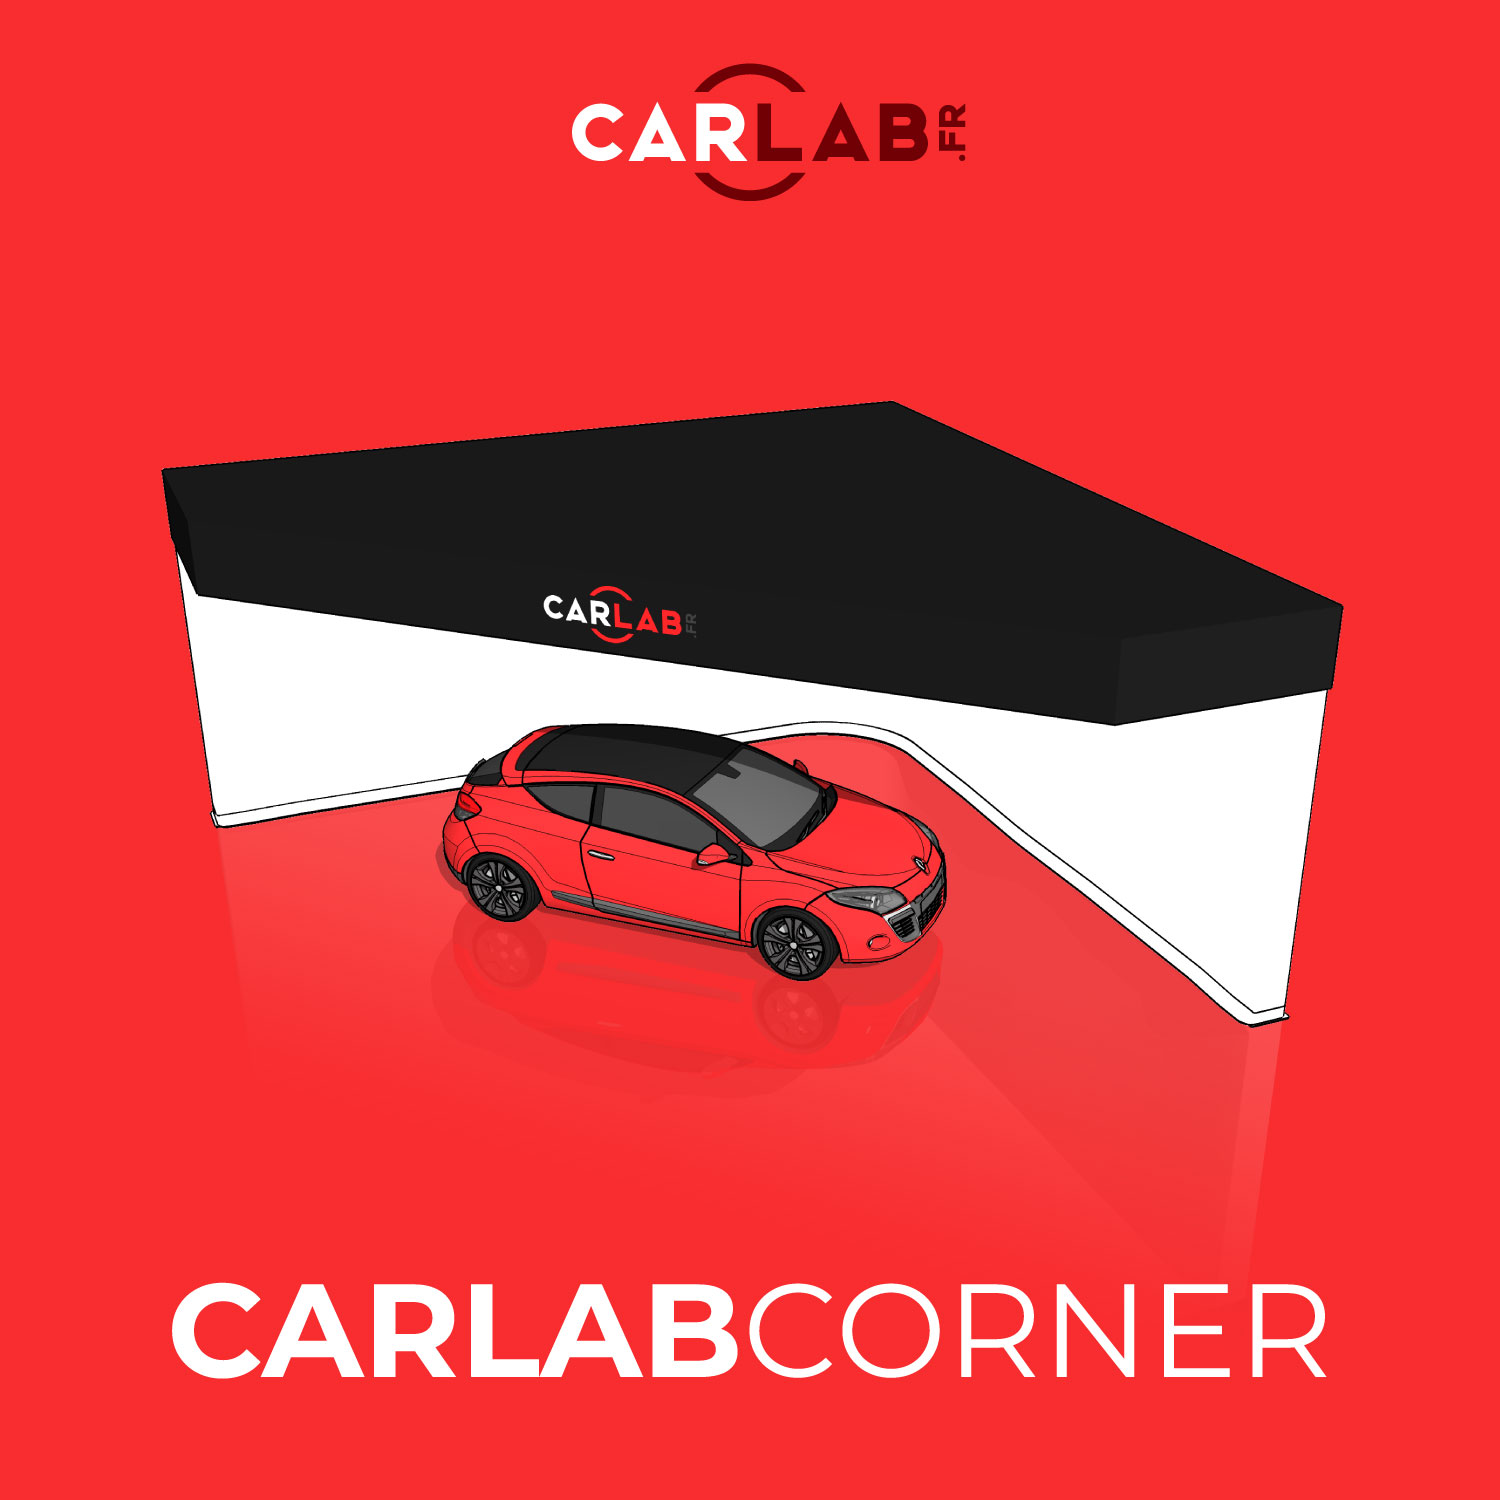 img btn carlab corner photo studios for cars